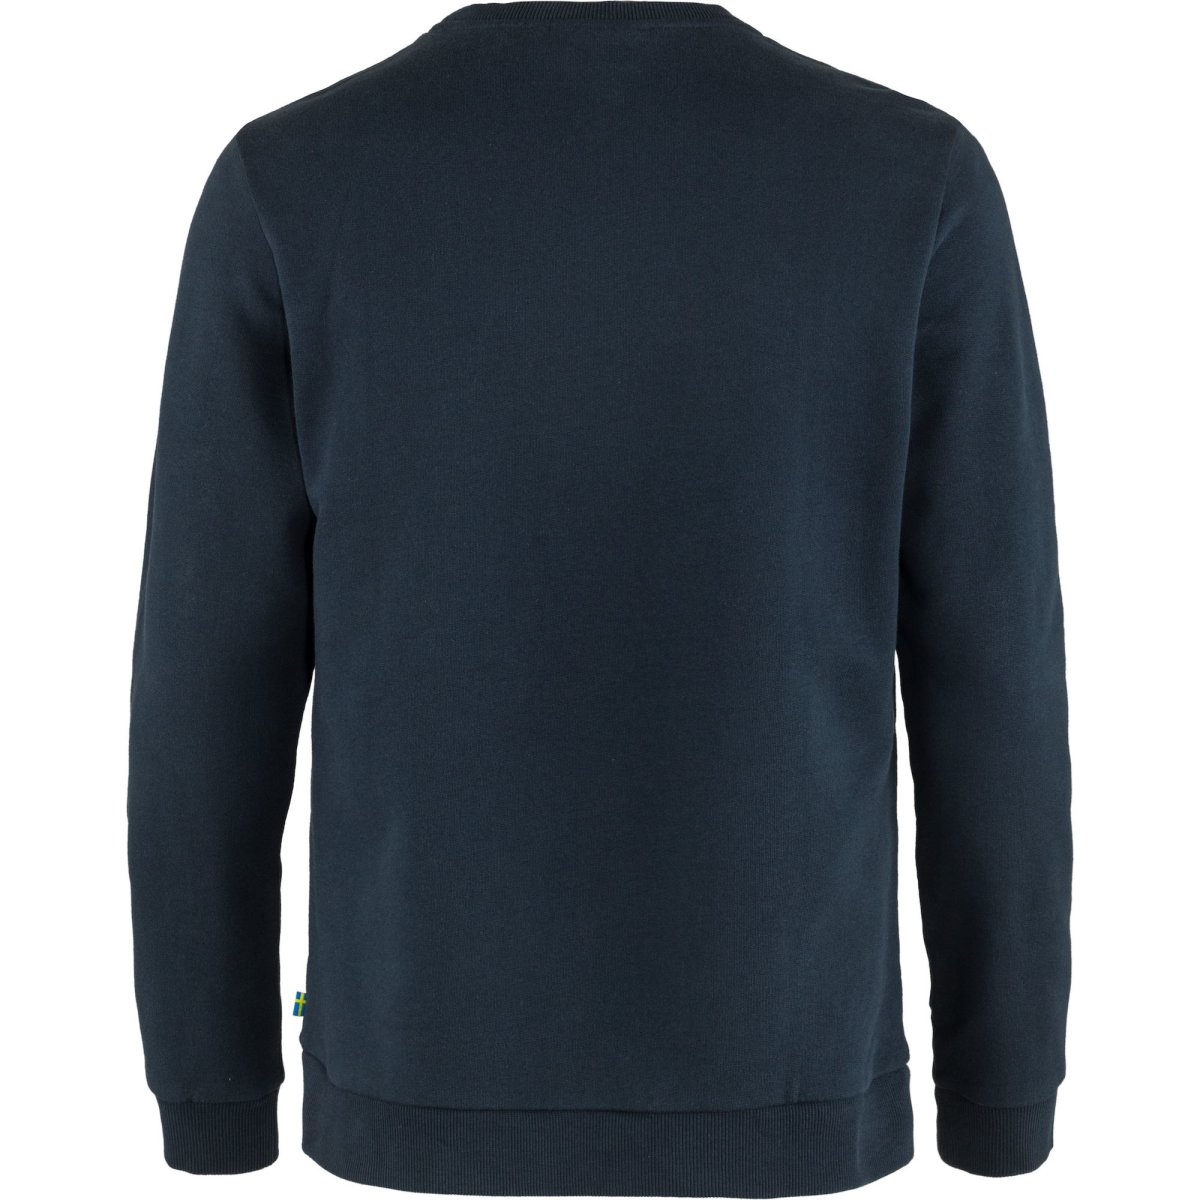 Fj&auml;llr&auml;ven Logo Sweater Sweatshirt  84142  dark navy Herren Pullover Sweater Shirt